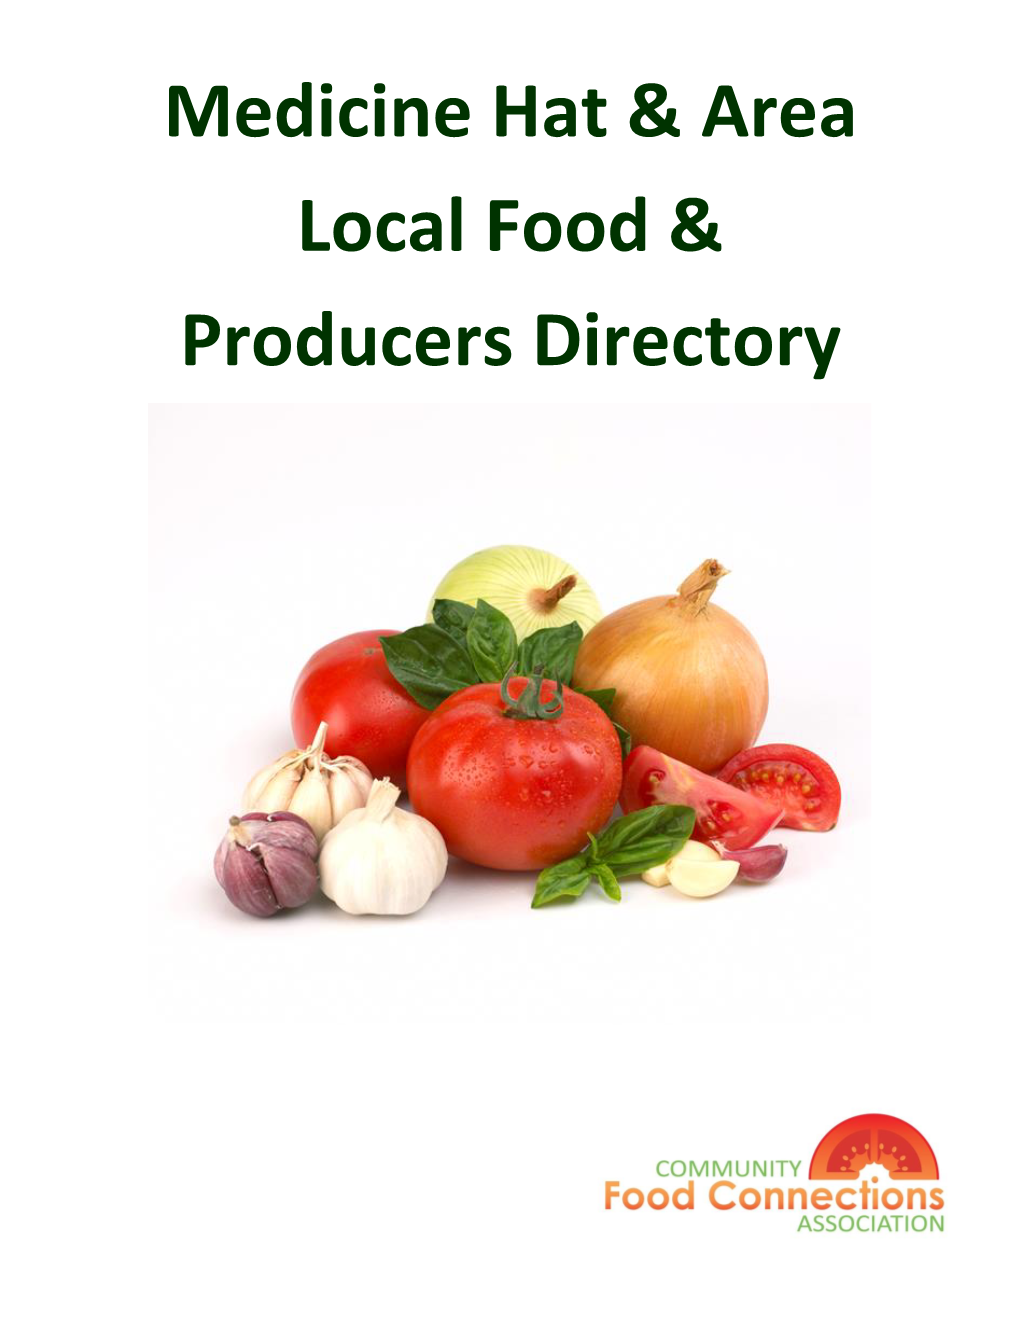 Medicine Hat & Area Local Food & Producers Directory